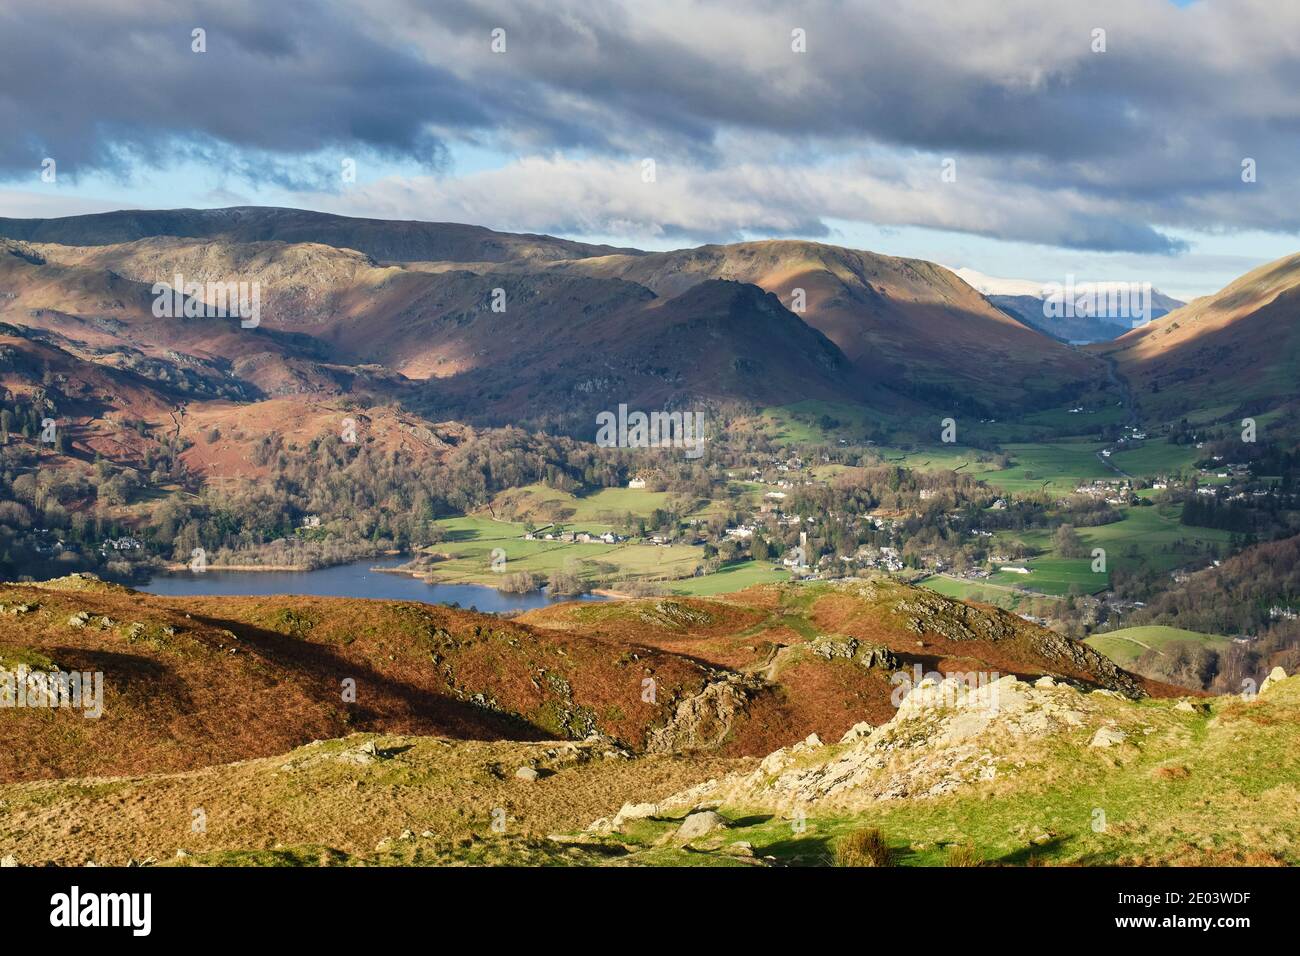 Ulscarf, Steel Fell, Gibson Knott, Helm Crag, Dunmail Raise e Grasmere visto da Loughrigg Fell, Grasmere, Lake District, Cumbria Foto Stock